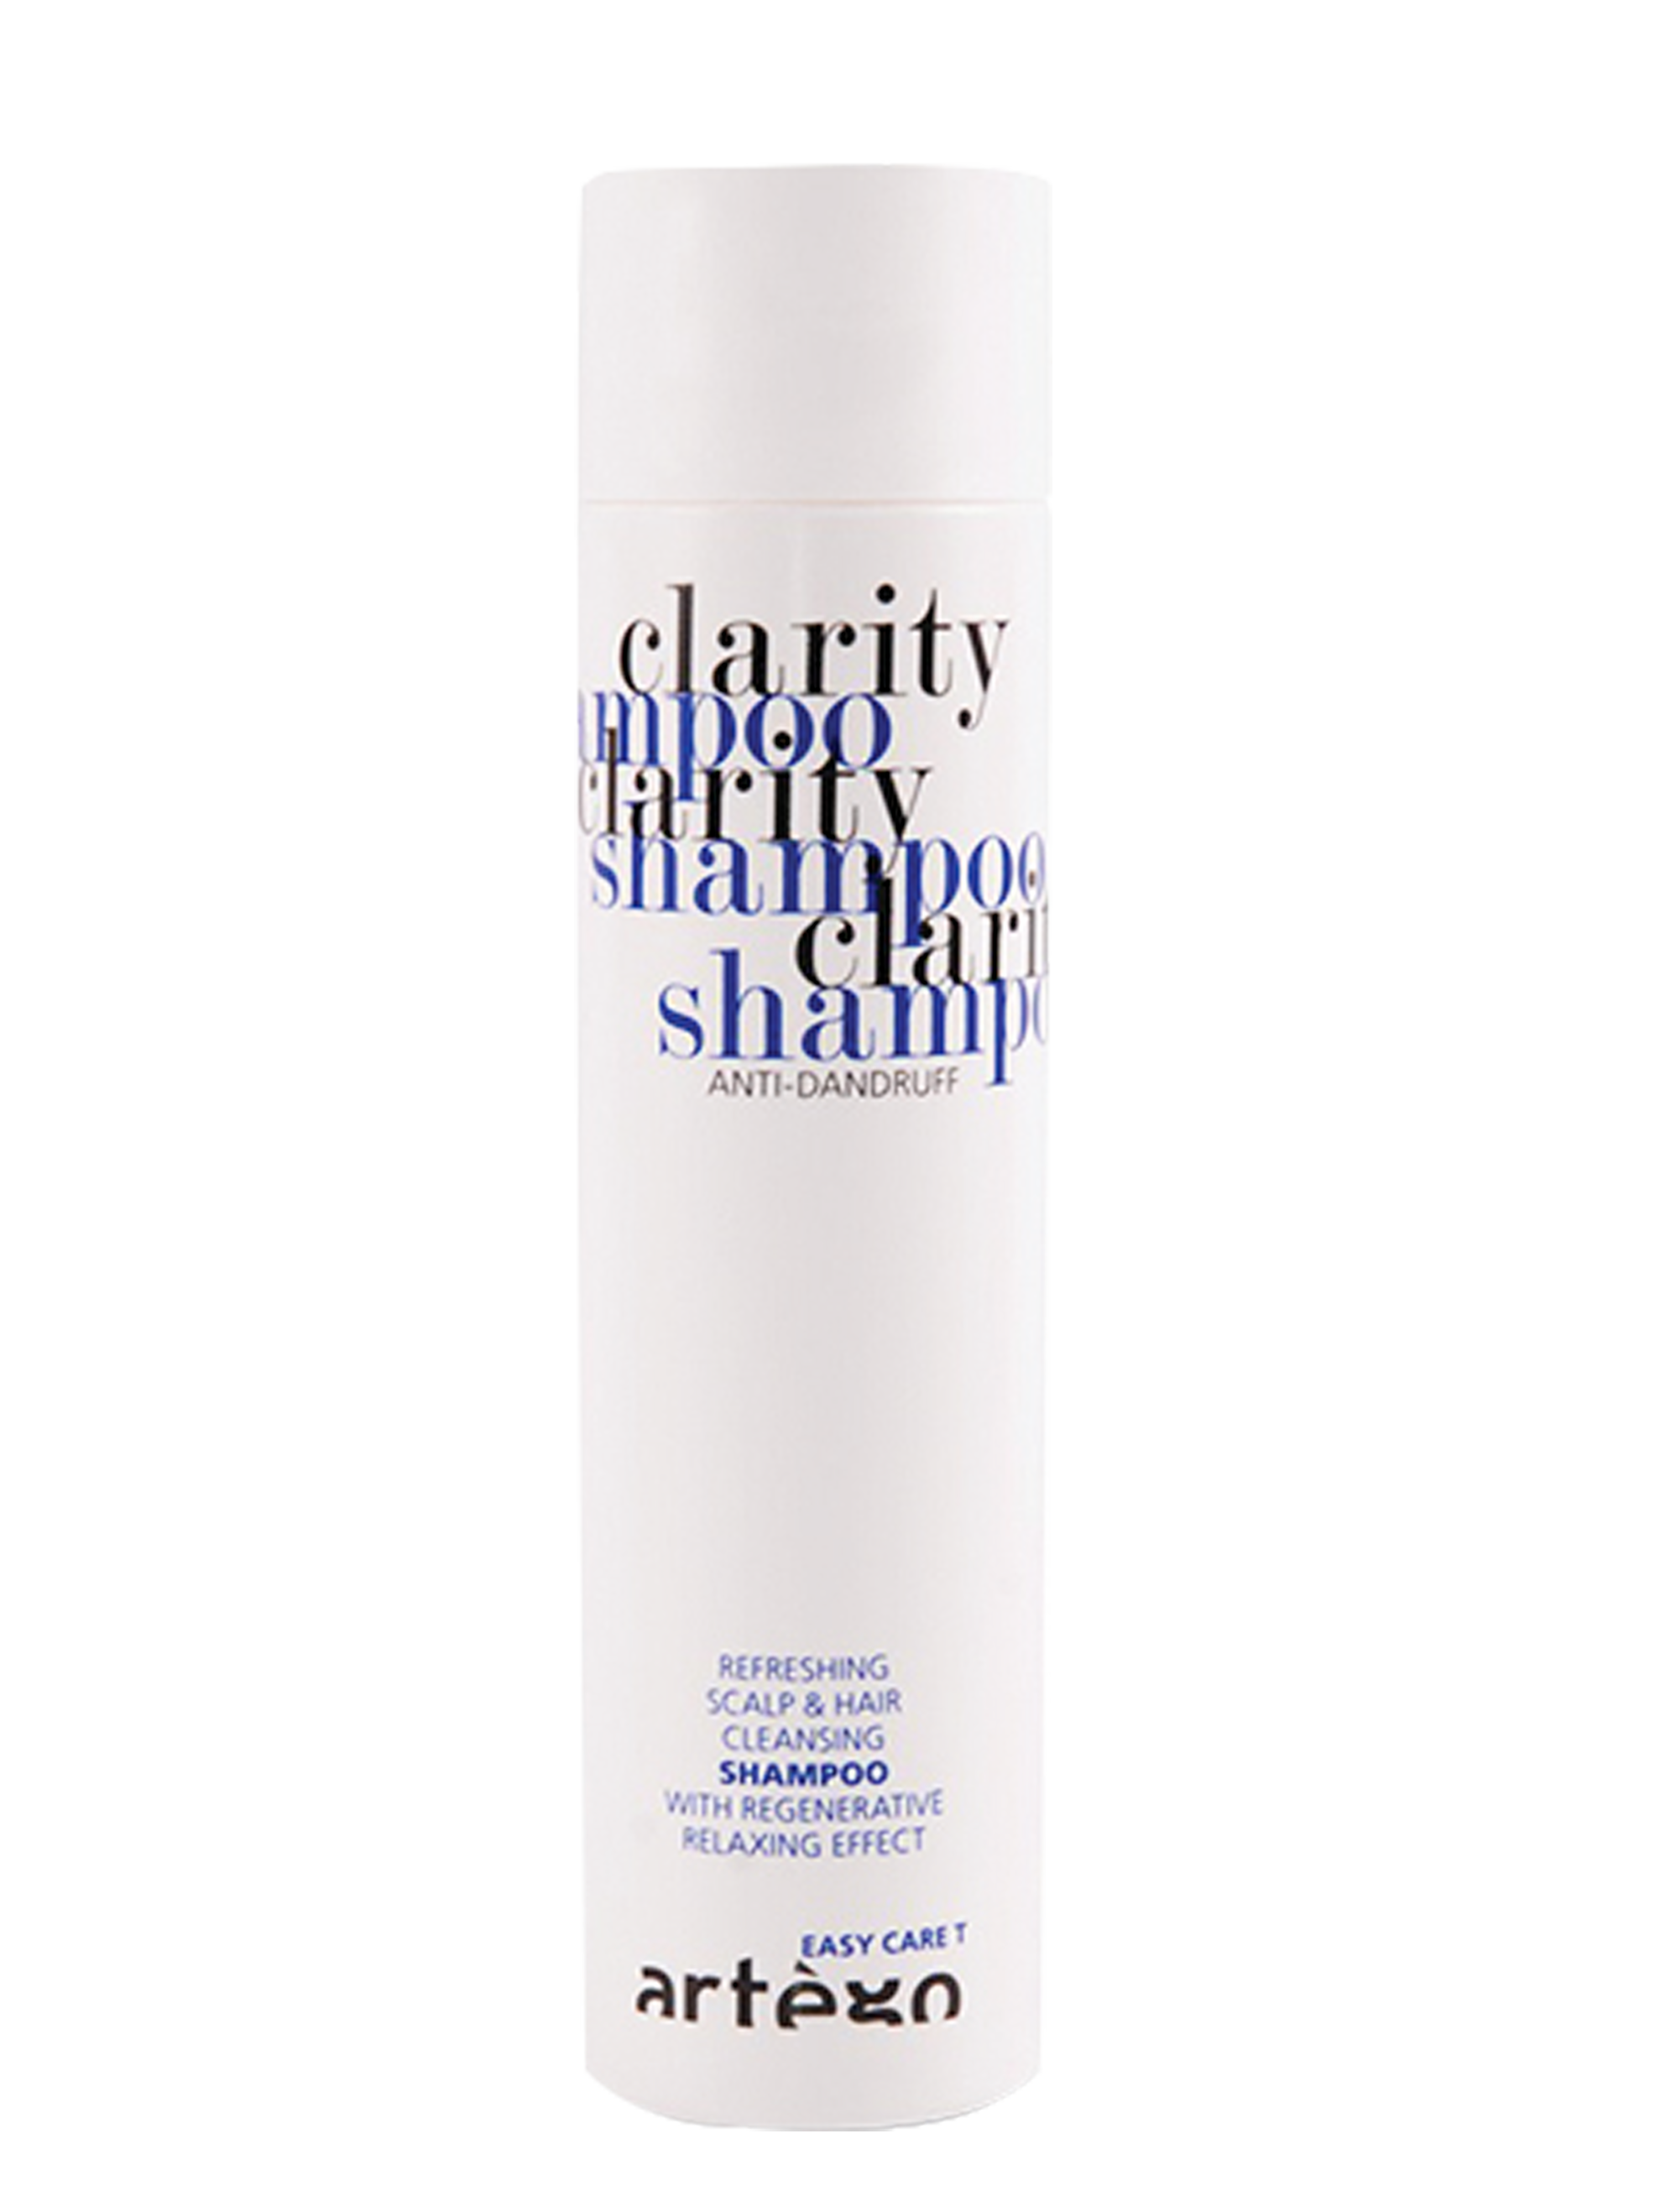 Easy-Care-T-Clarity-Shampoo-Anti-Dandruff-250ml